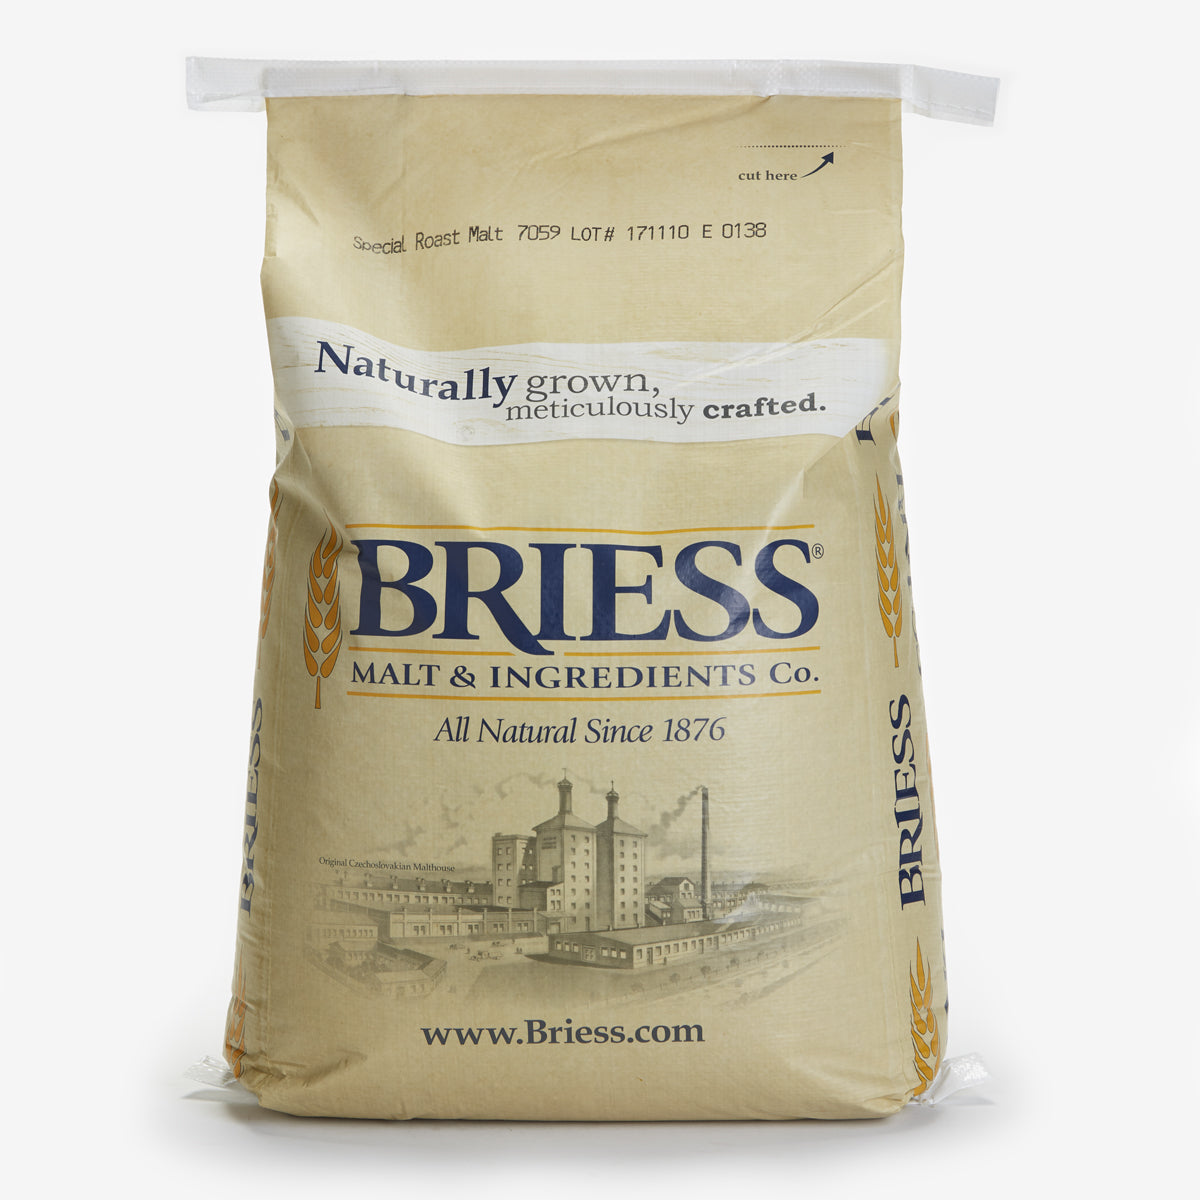 Briess Special Roast Malt